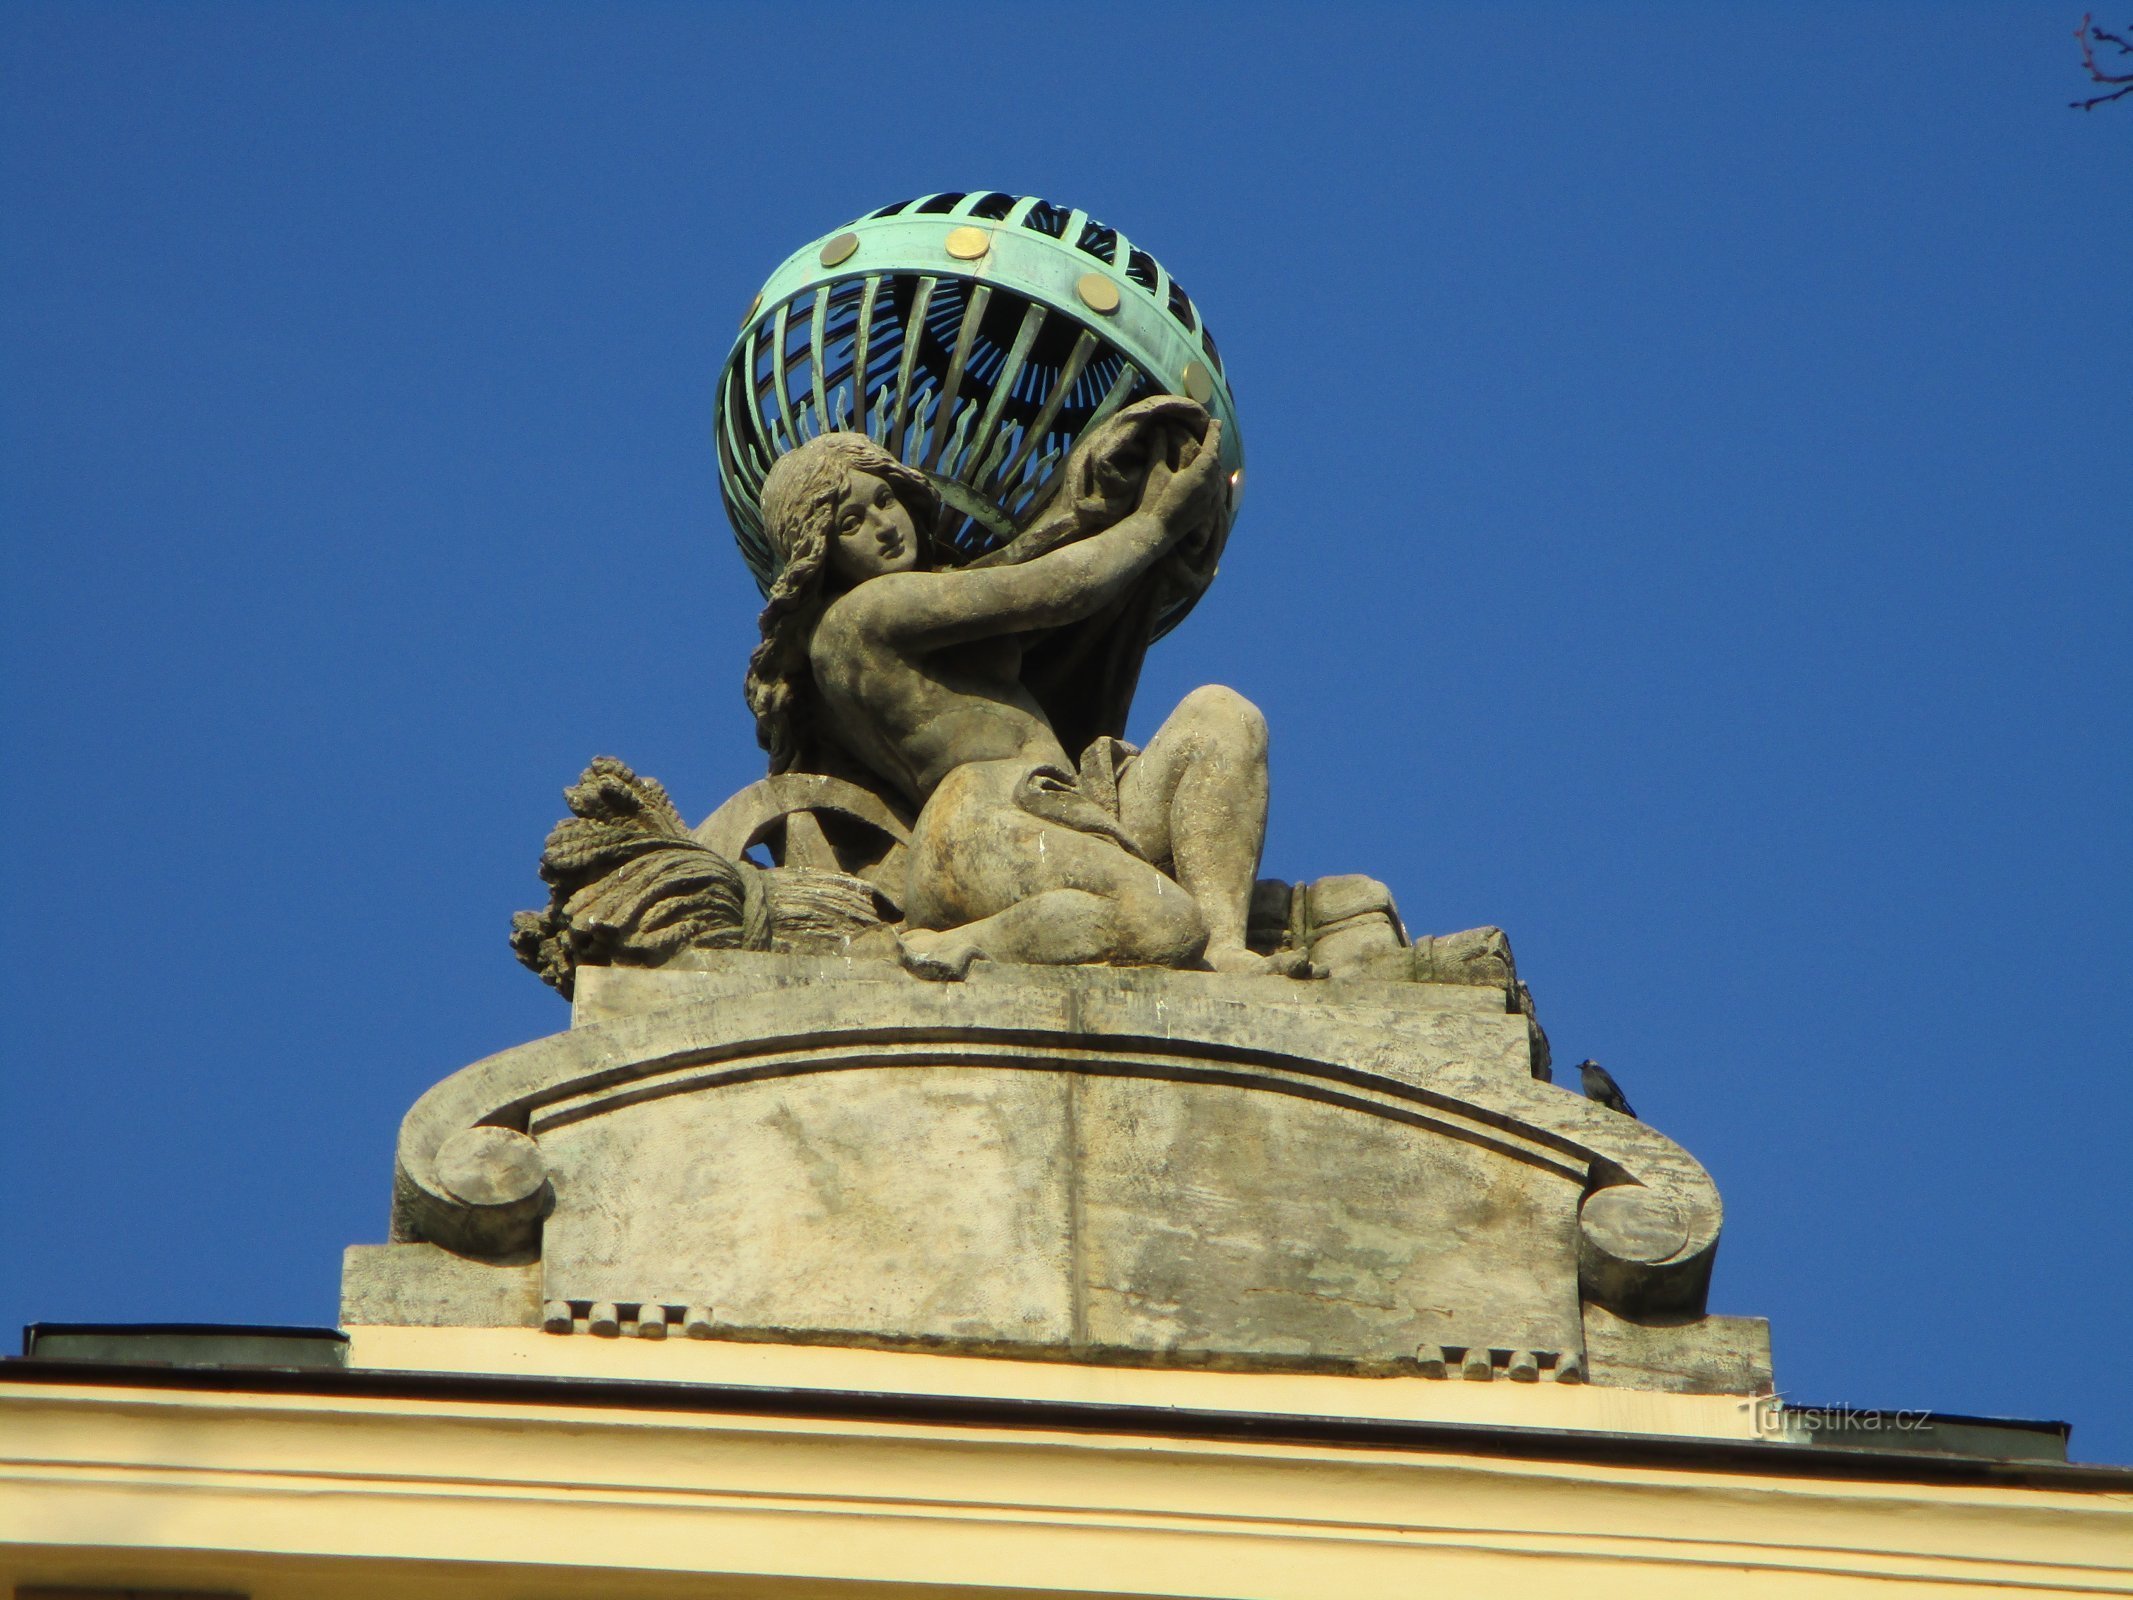 Statue på Det Pædagogiske Fakultet (Hradec Králové, 9.2.2020. februar XNUMX)